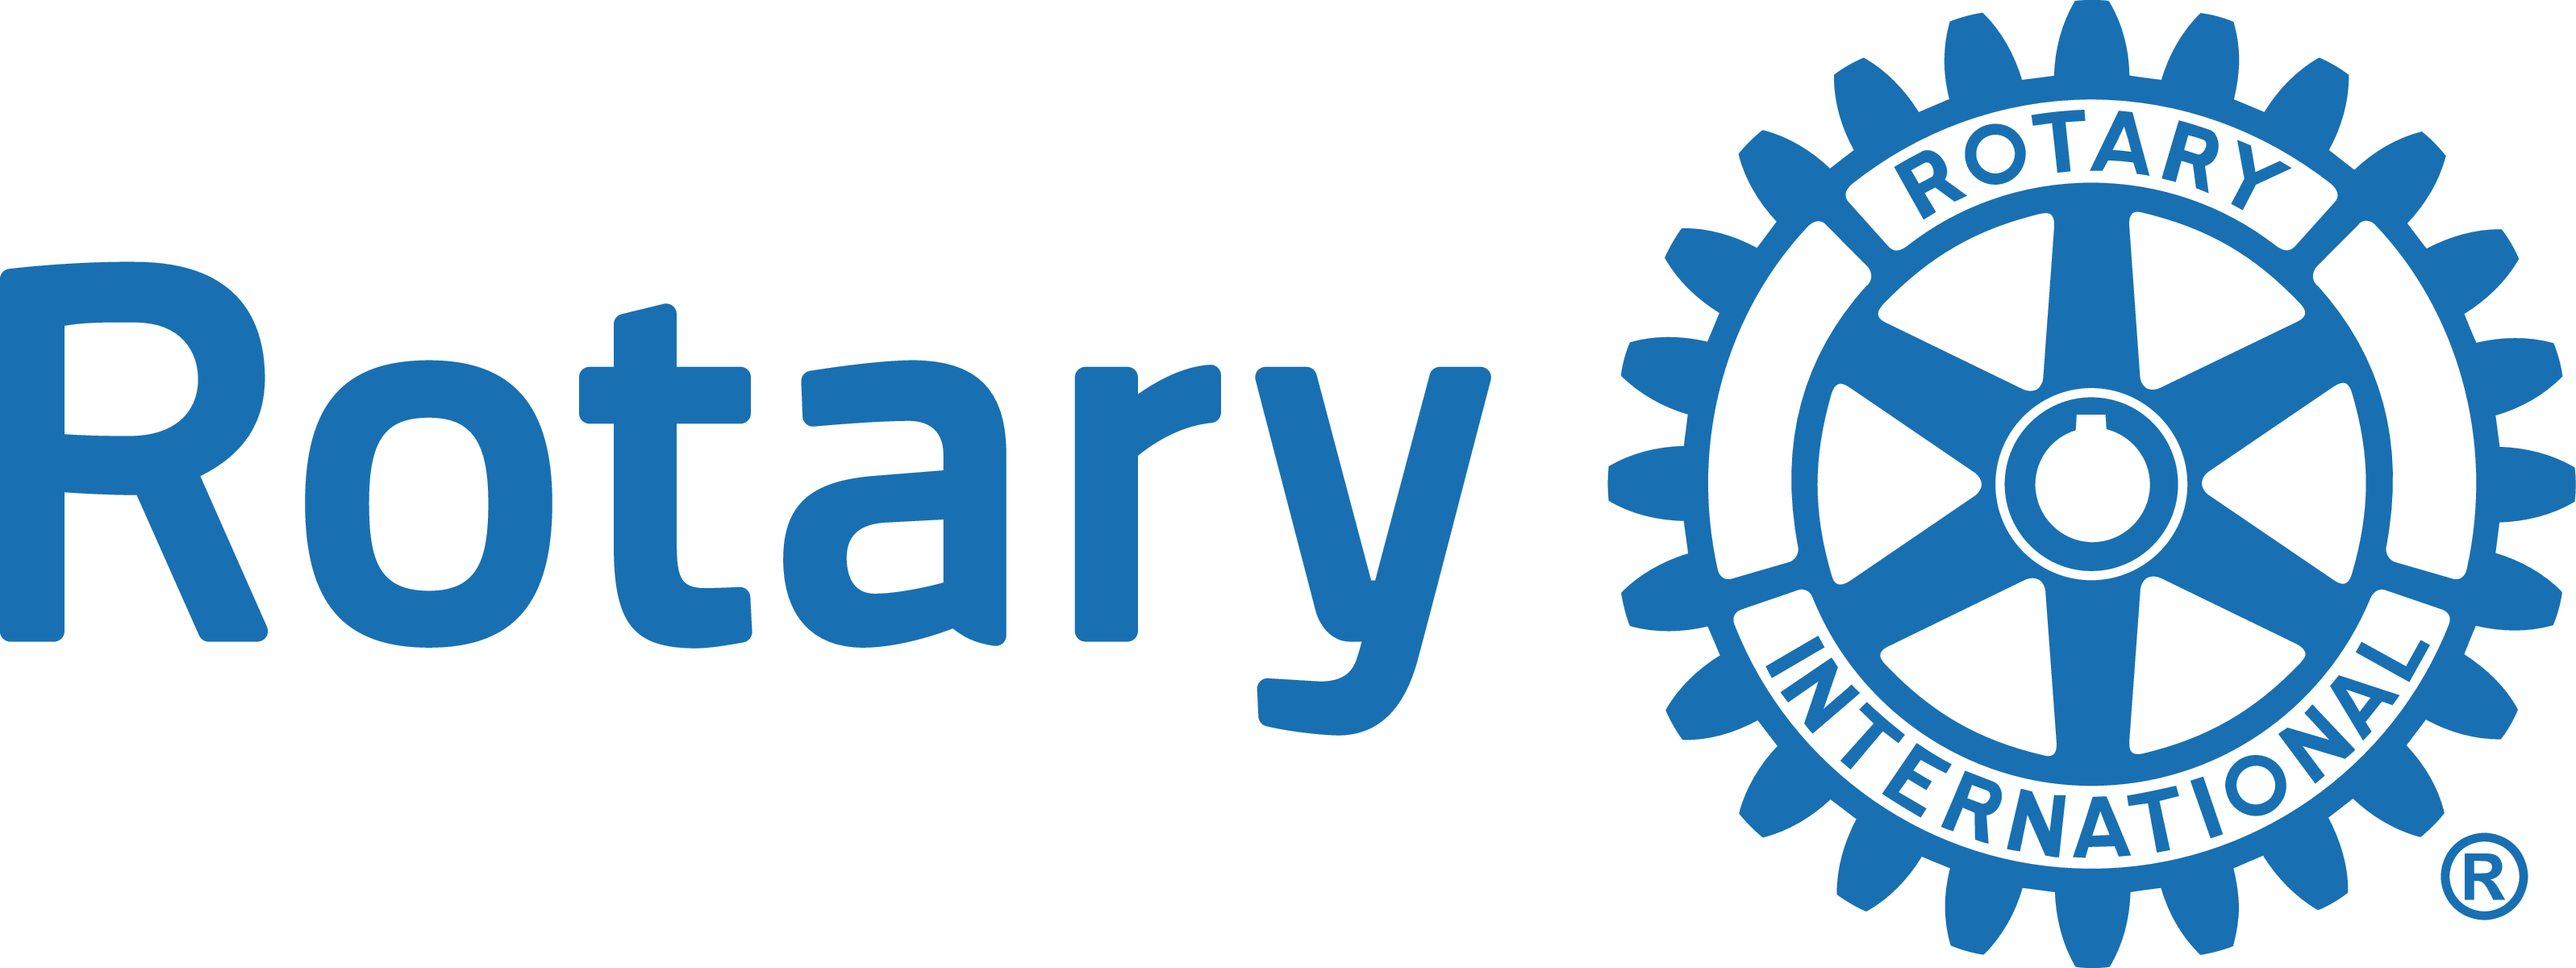 Rotary Masterbrand Simplified - Azure